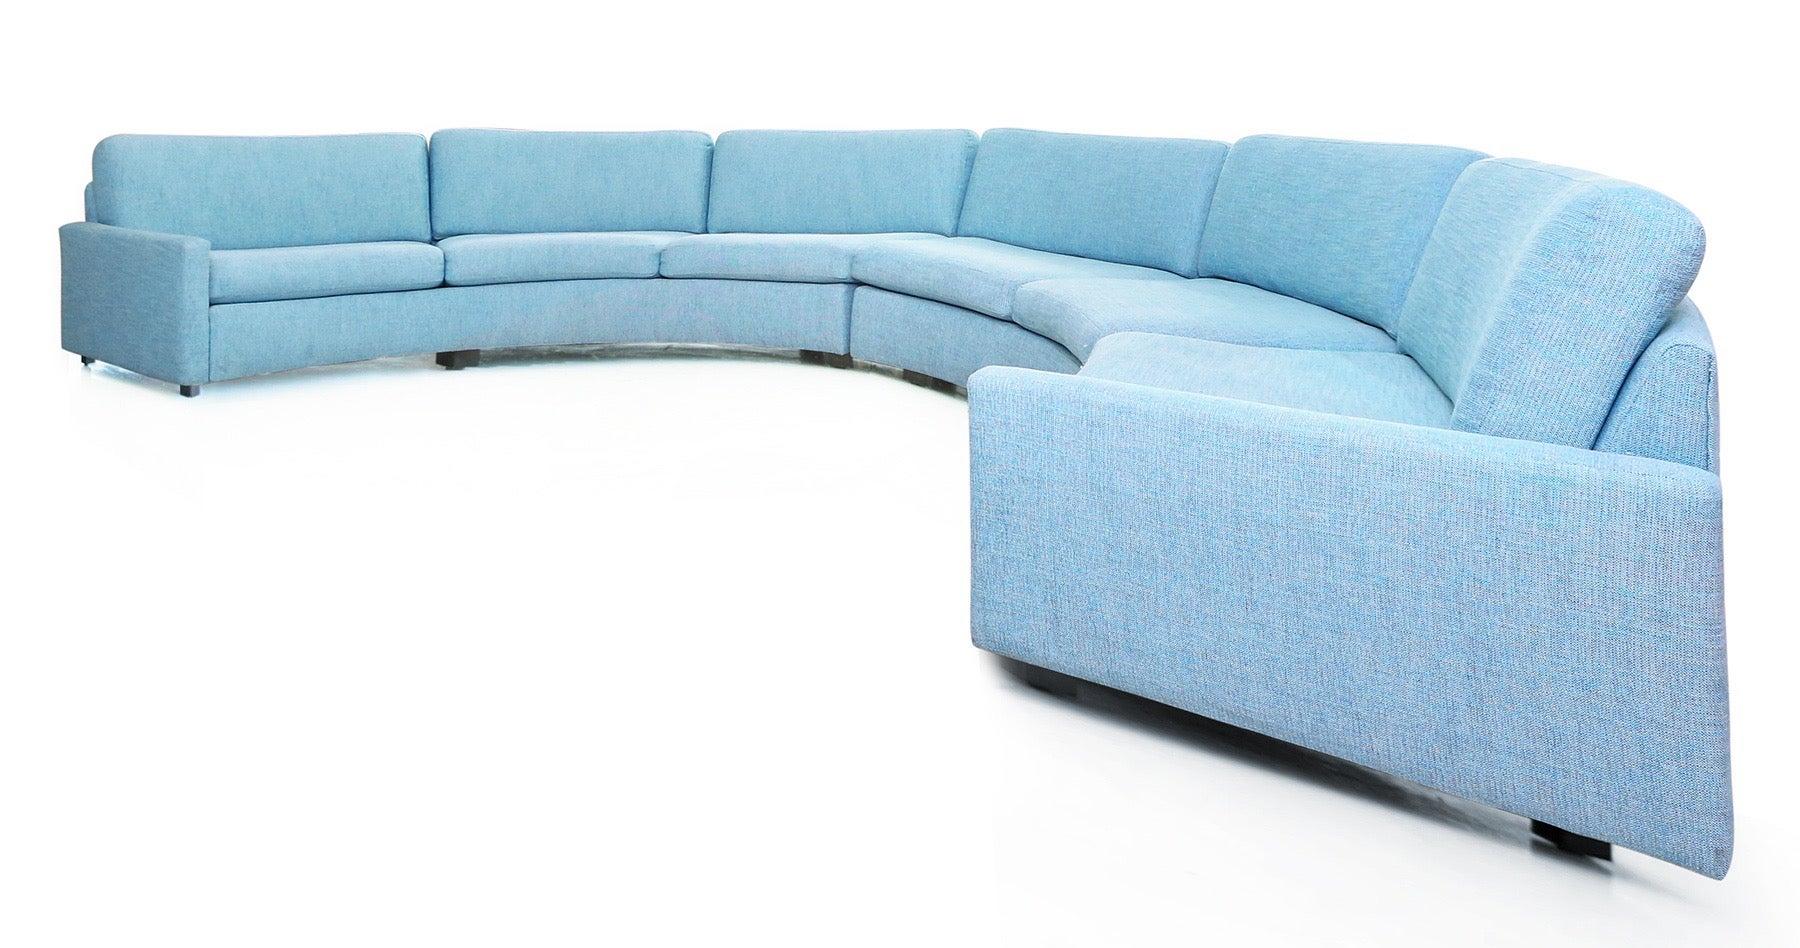 Late 20th Century Milo Baughman Turquoise Aqua Semi Circular Sectional Sofa for Thayer Coggin